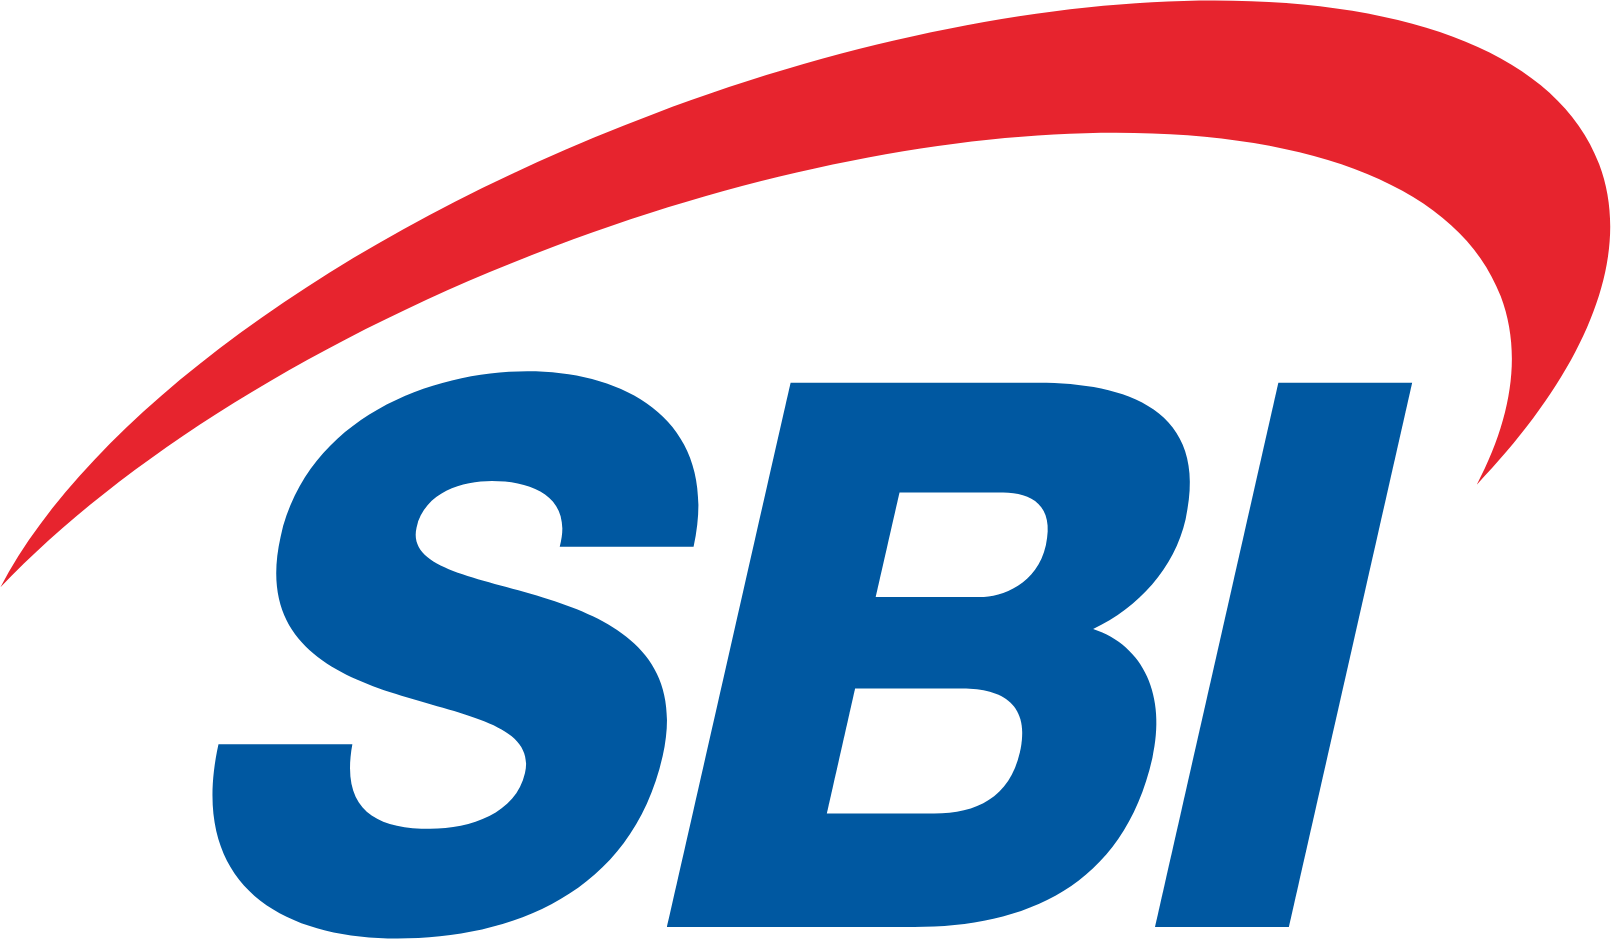 Creat SBI logo in MS Word|#SBI - YouTube